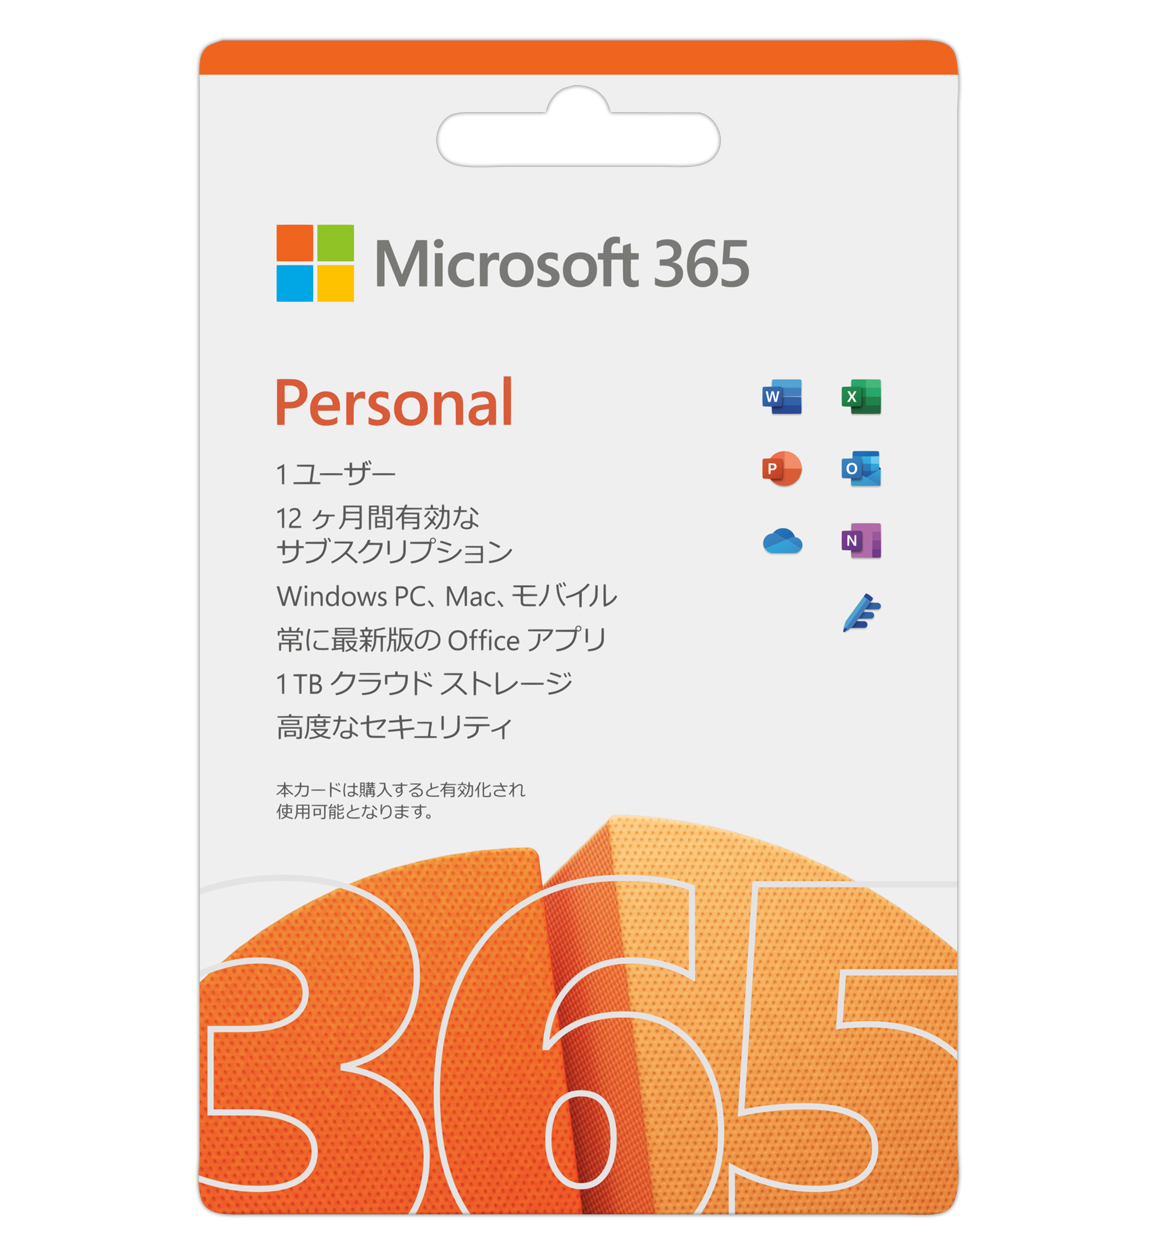 Microsoft 365 Personal 2021